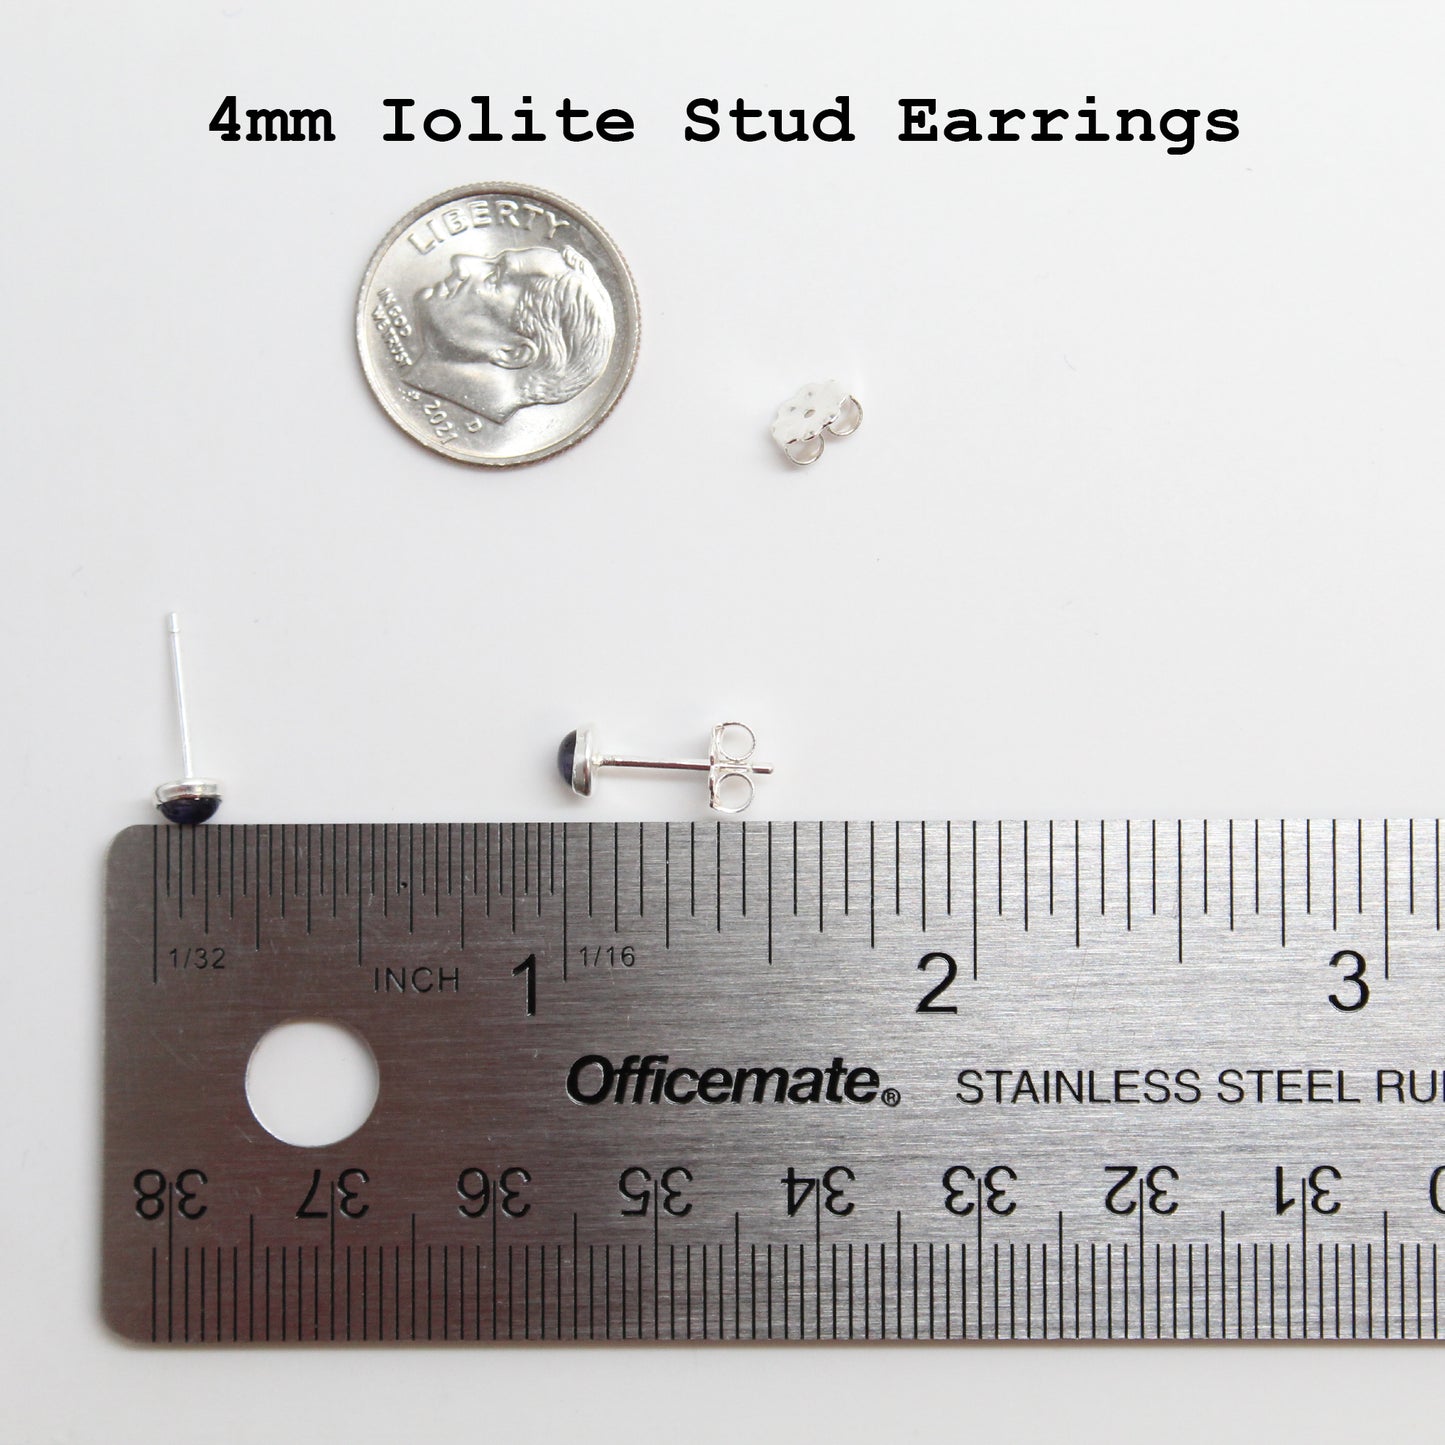 Small 4mm Iolite Stud Earrings 